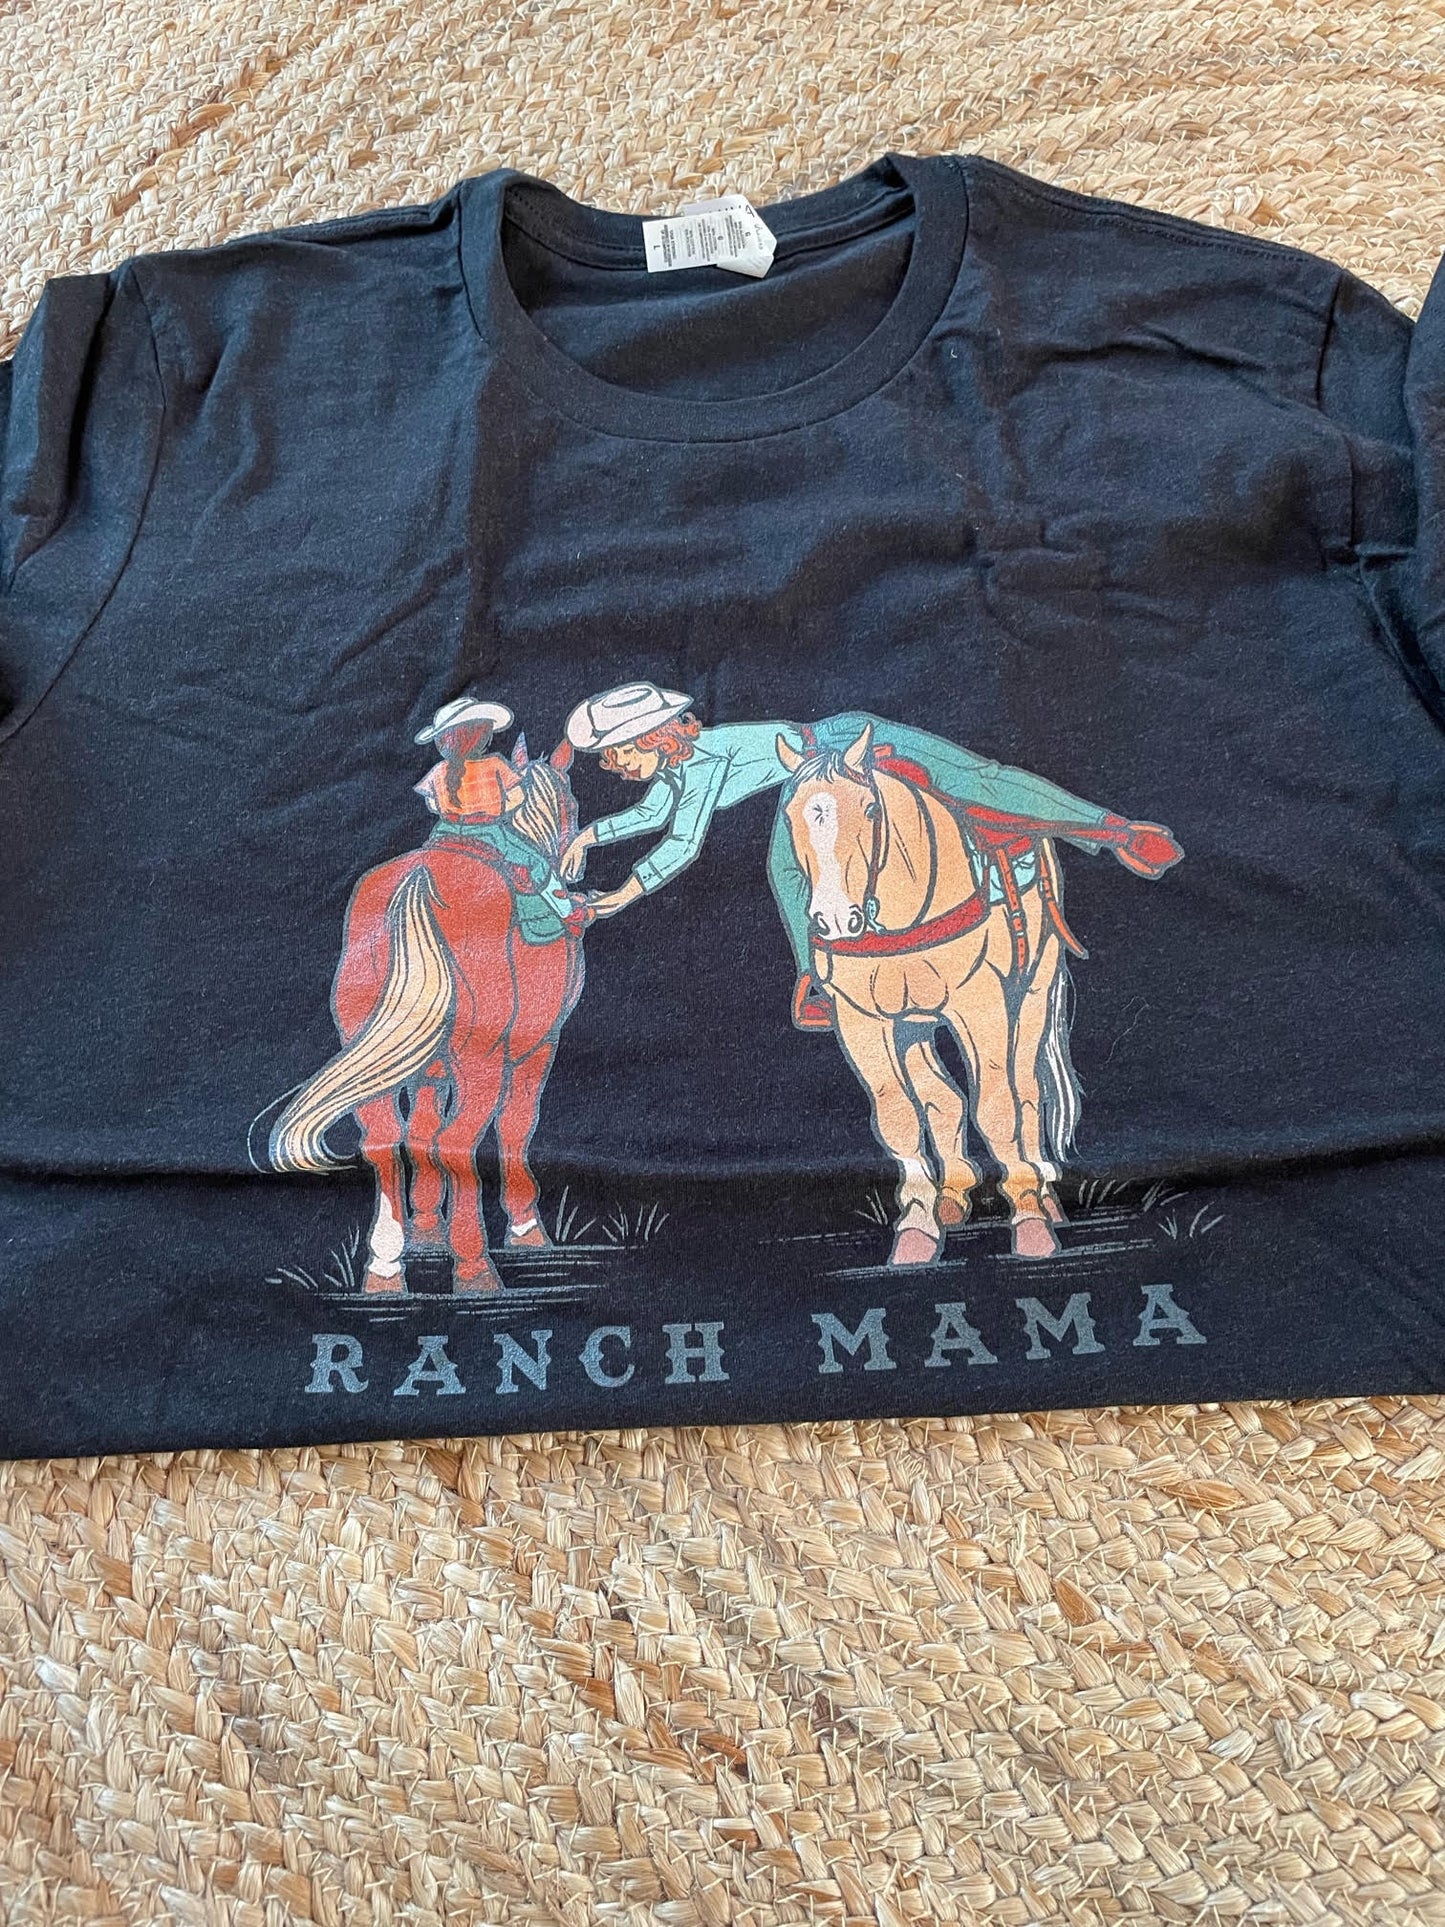 Ranch Mama Tee